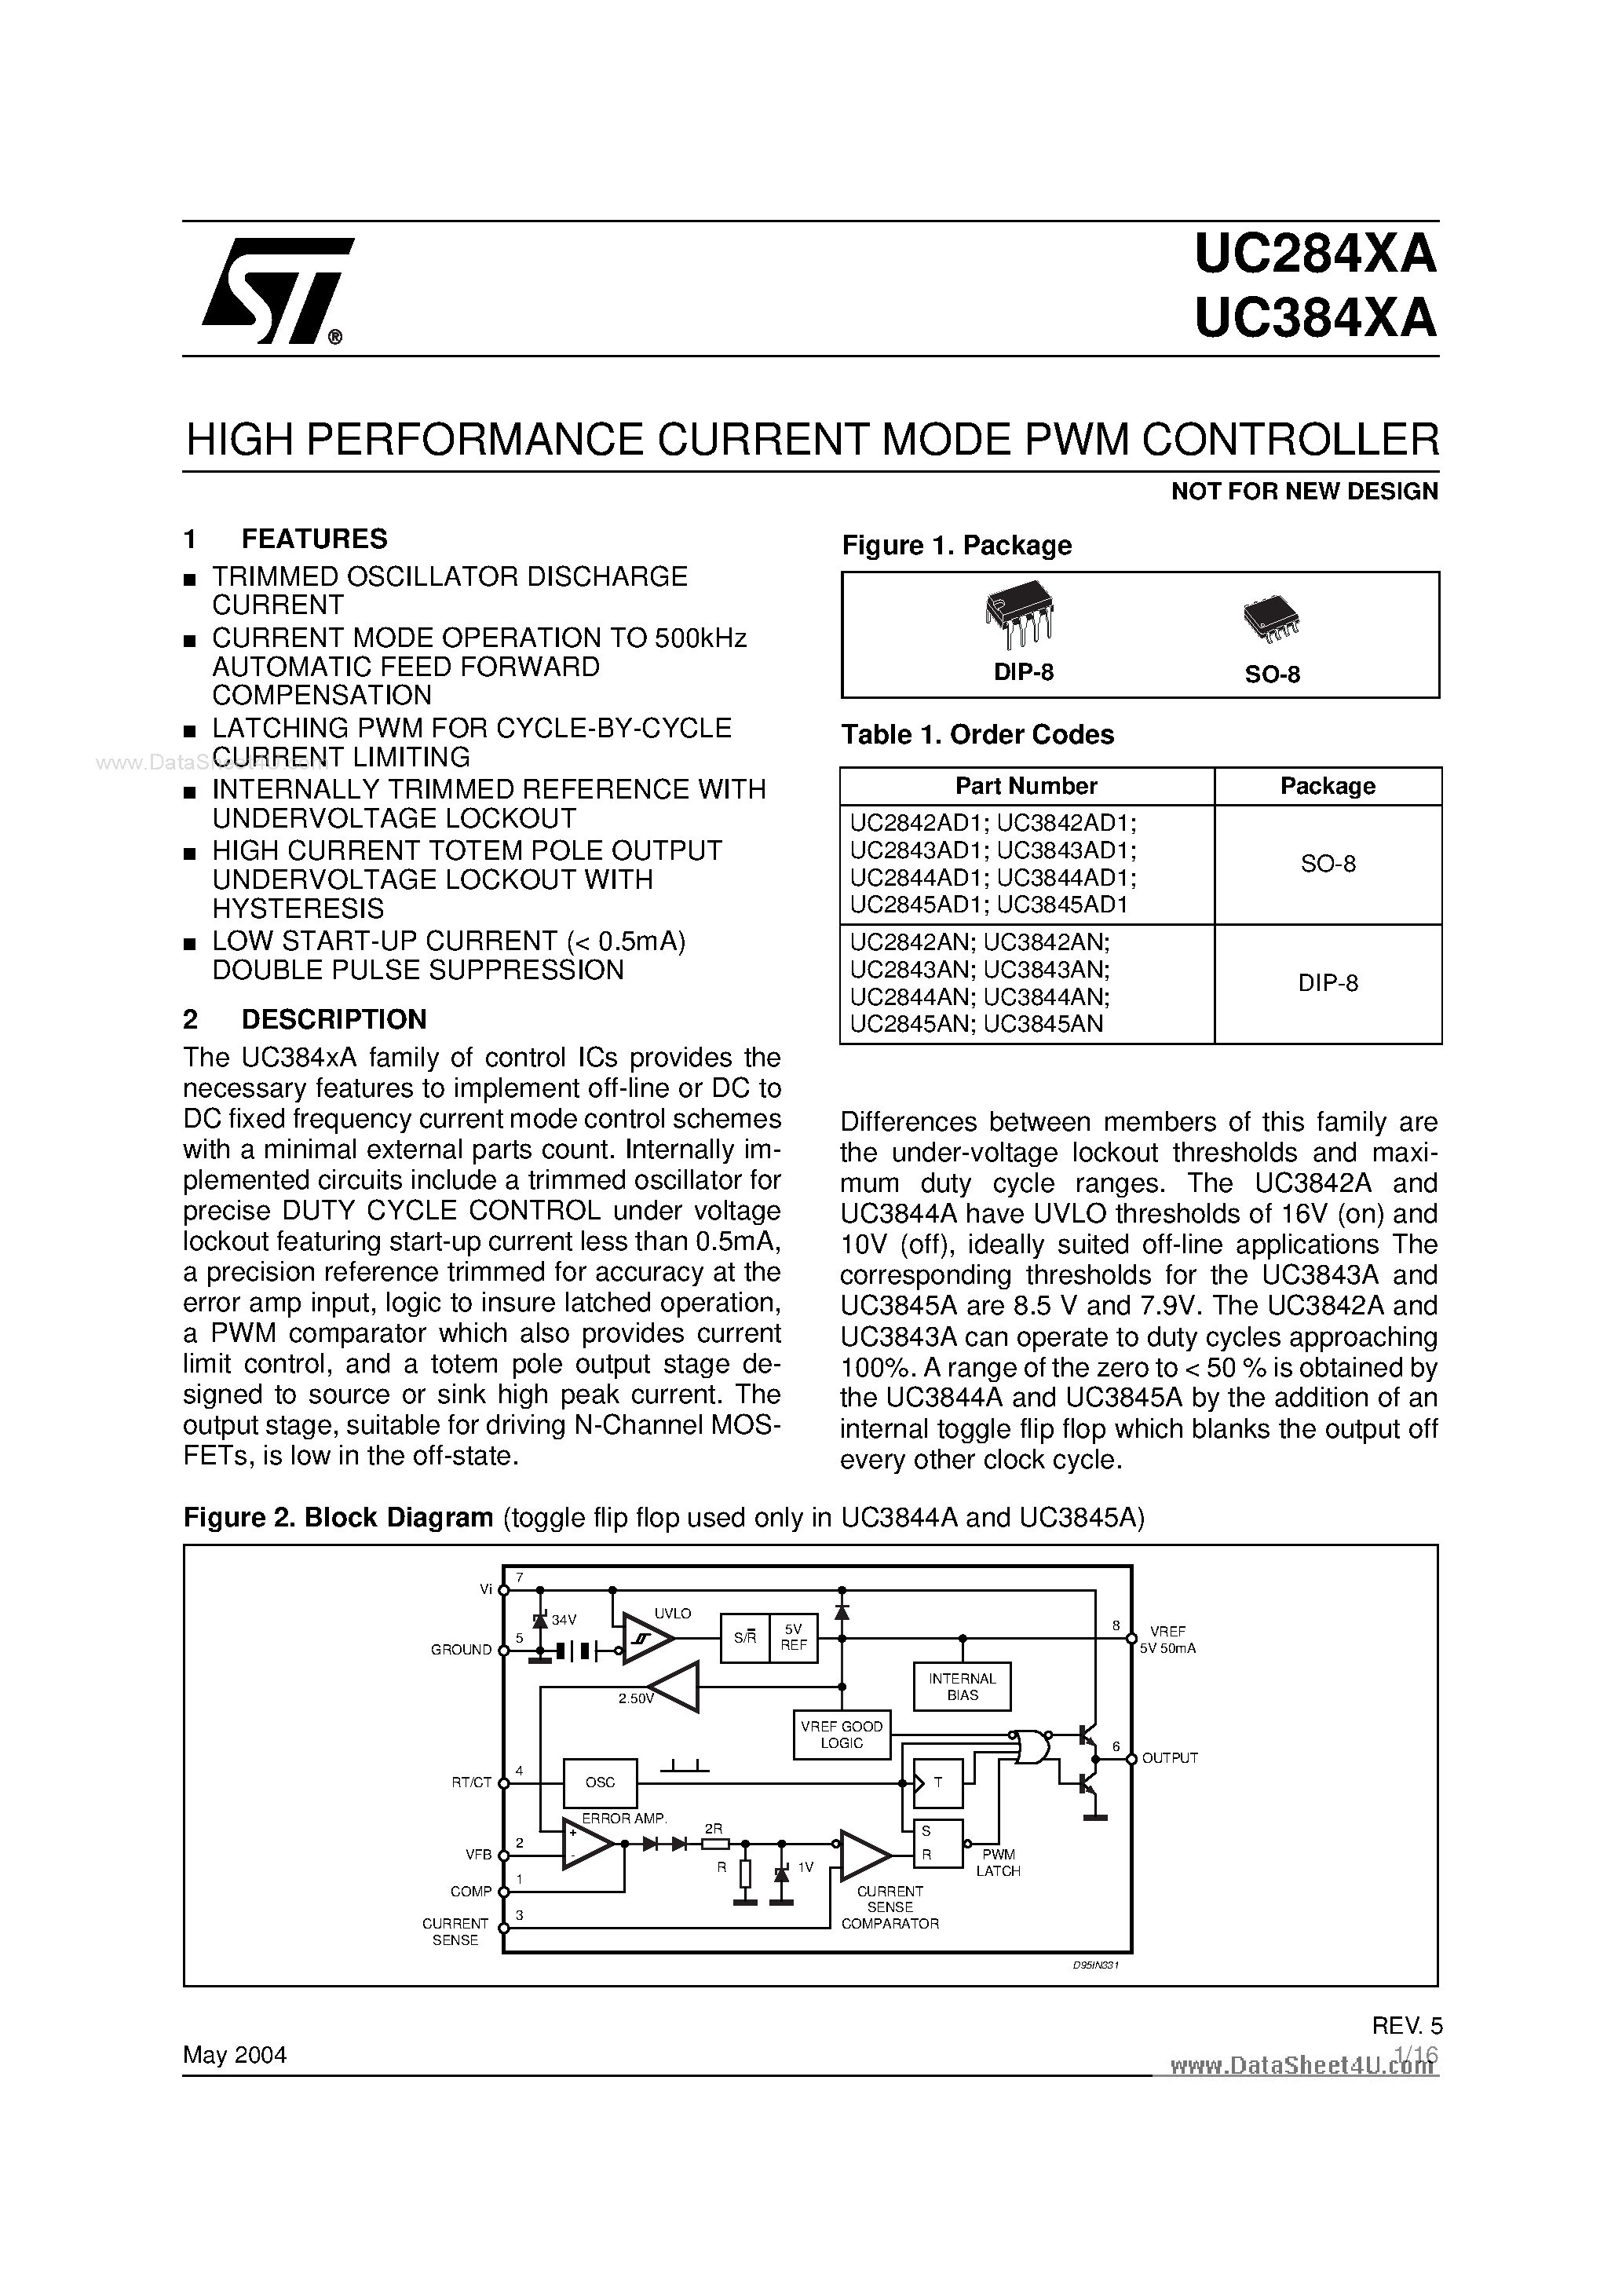 Datasheet UC284xA - HIGH PERFORMANCE CURRENT MODE PWM CONTROLLER page 1